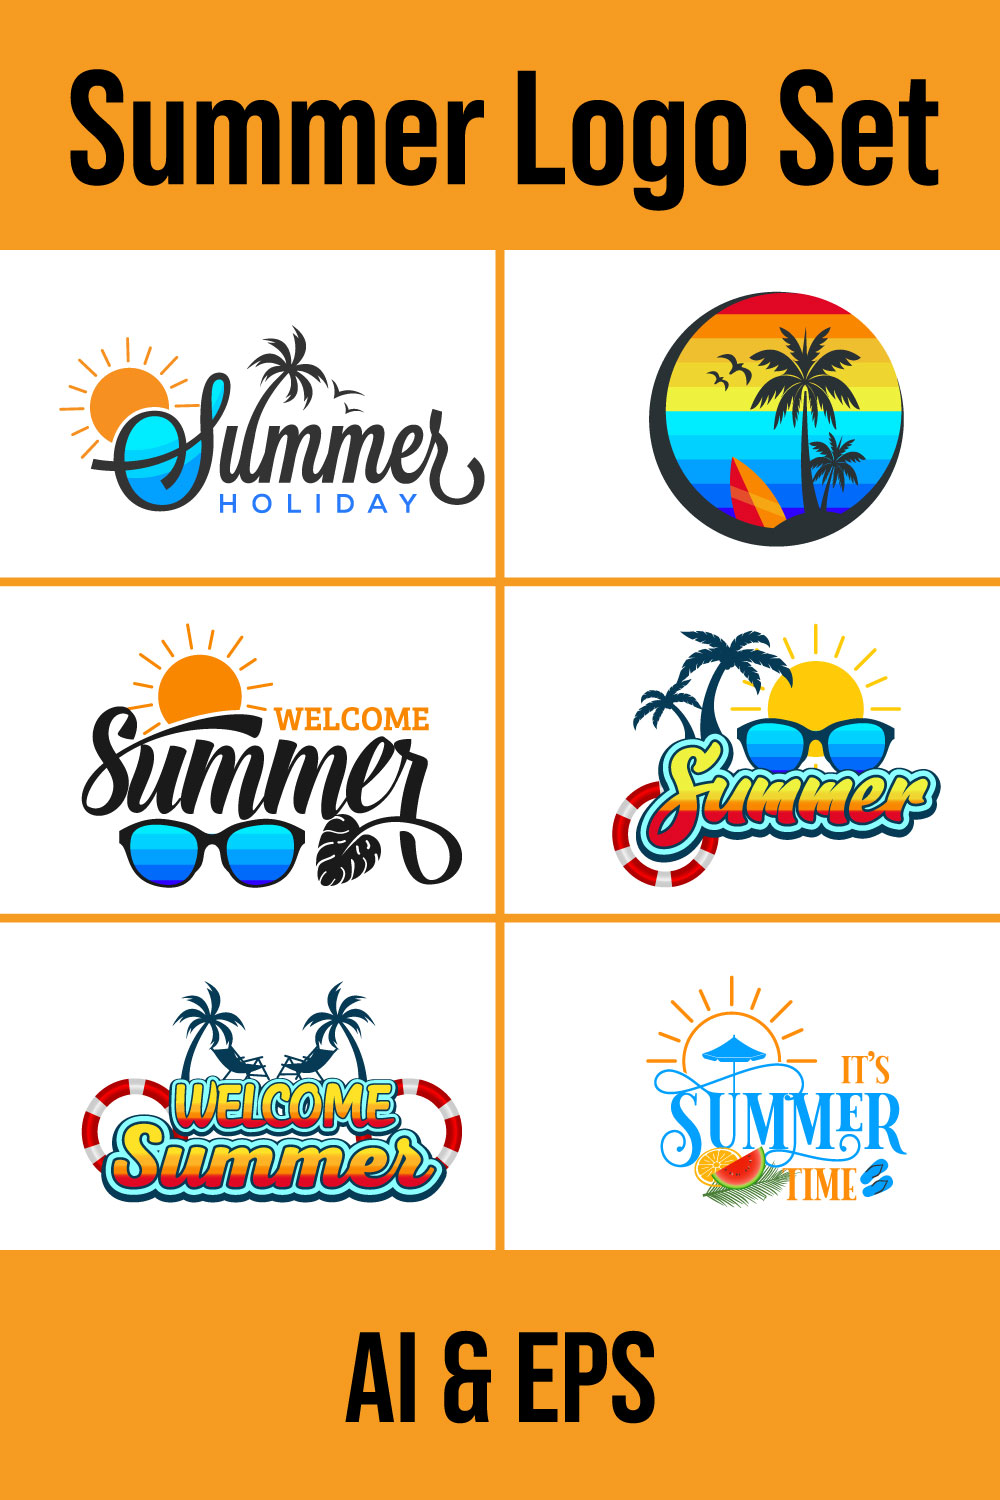 Summer holidays design concept vector illustration Tropical beach scene pinterest preview image.